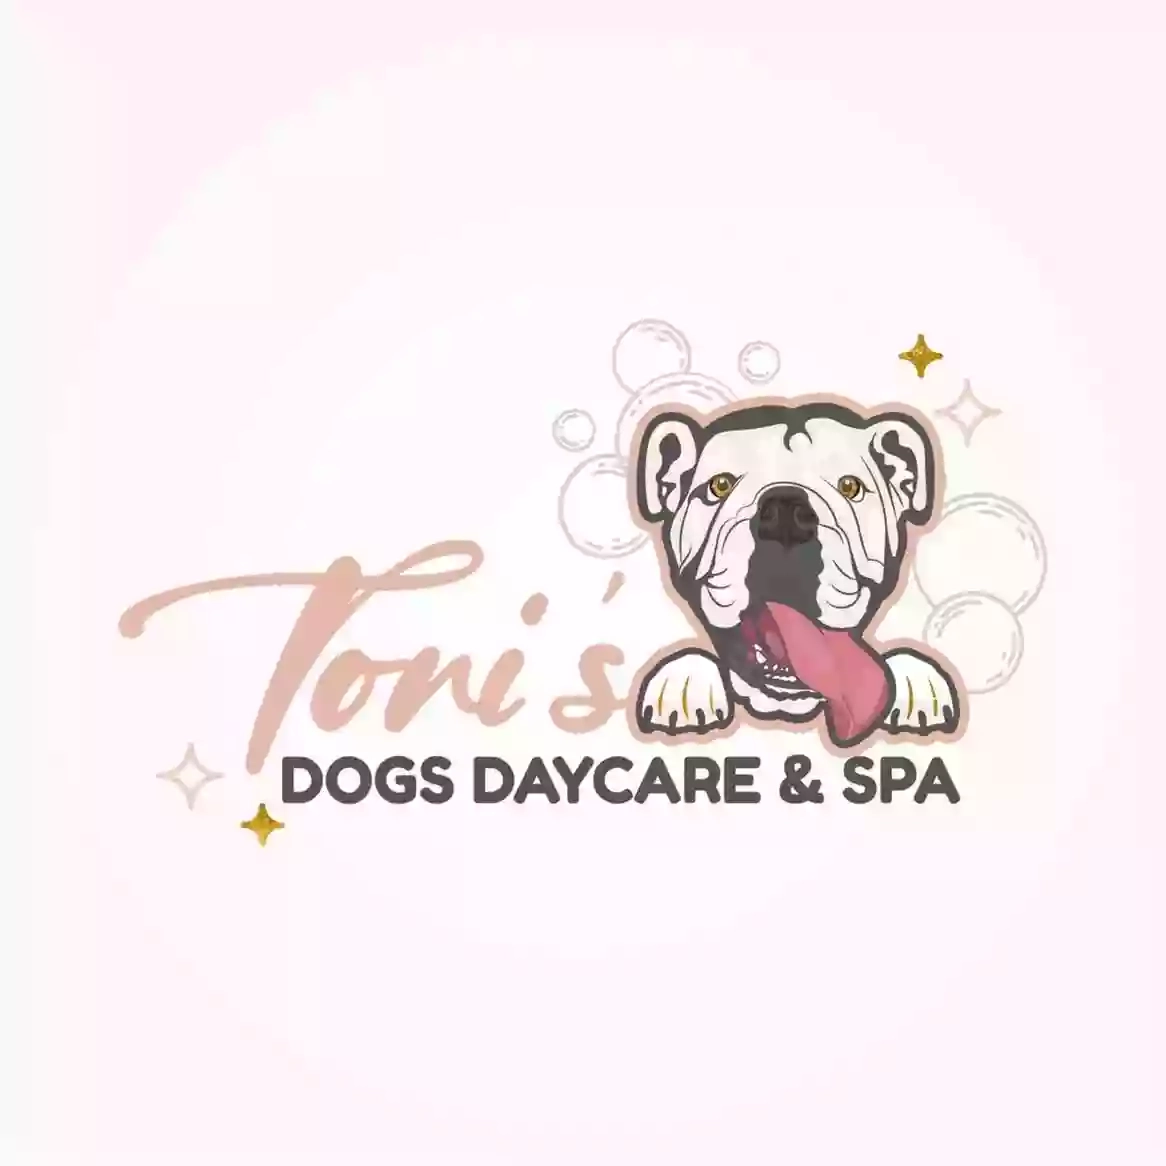 Toni’s Dogs Daycare & Spa.